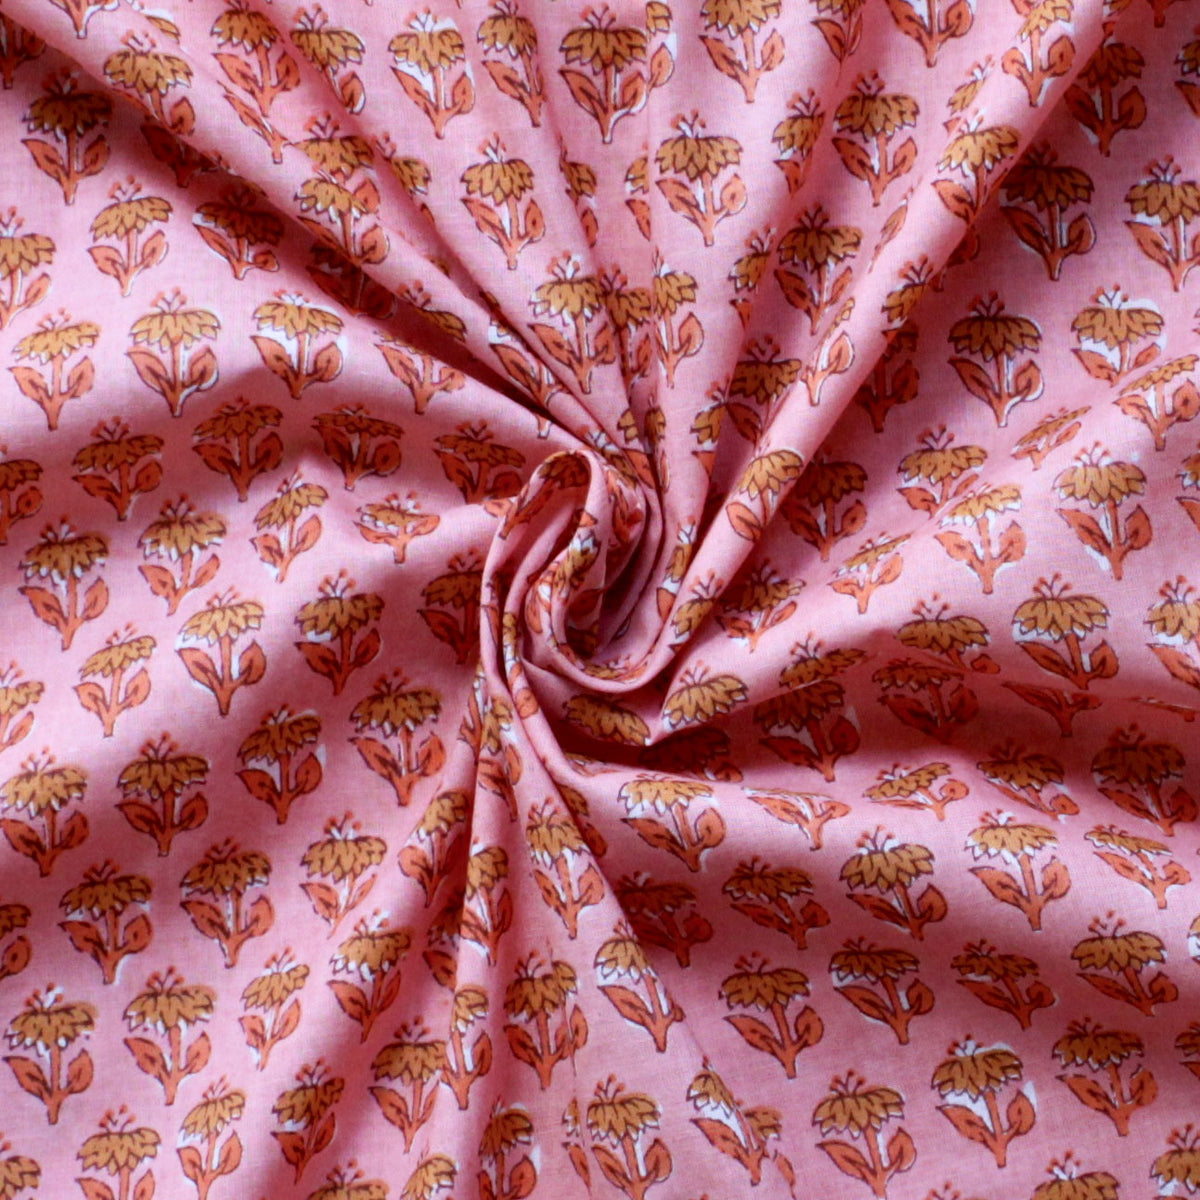 Small Orange Flowers On Pink 100 % Cotton Fabric Design 390